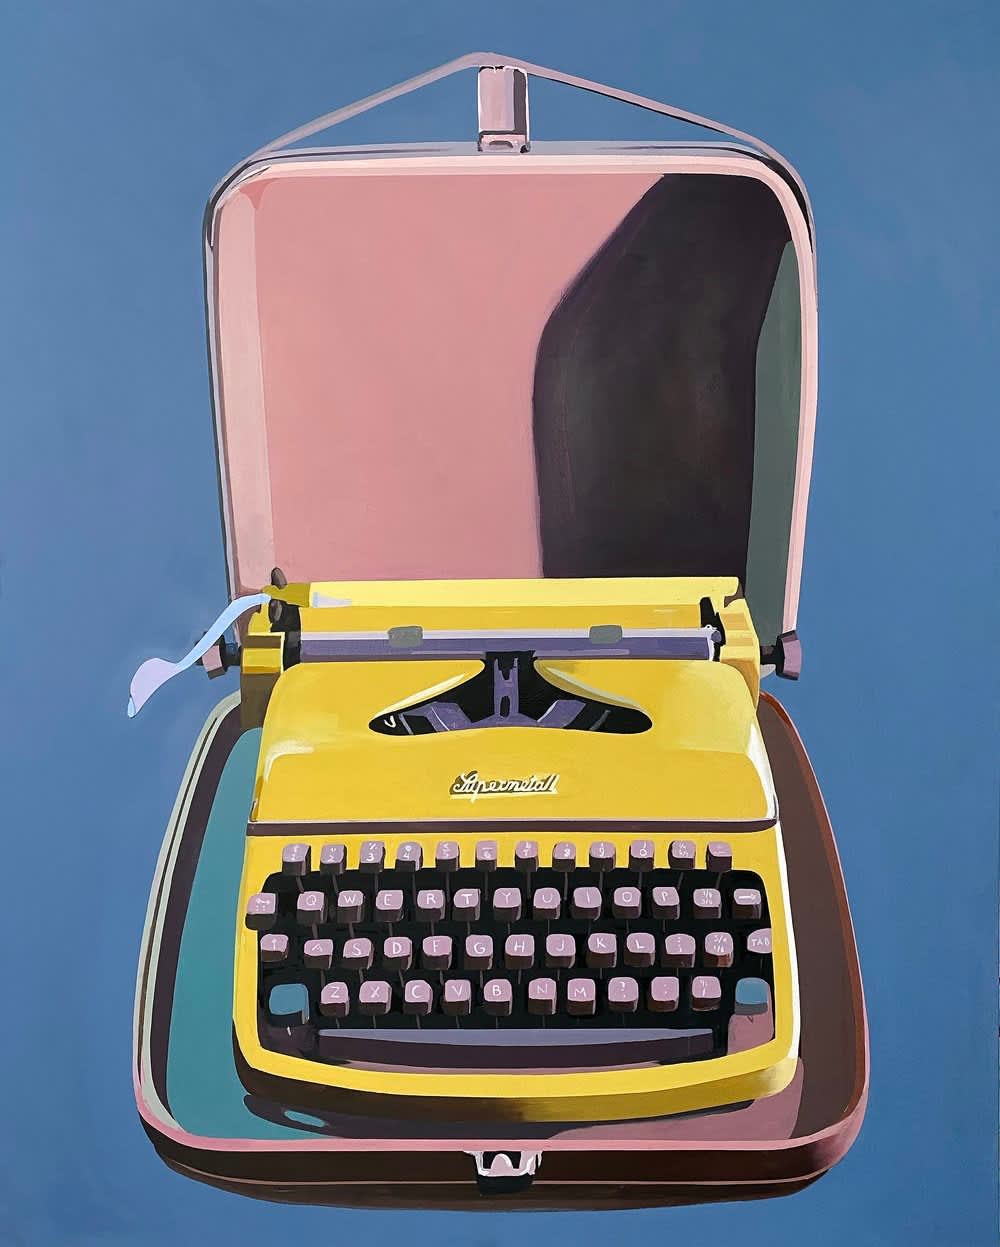 Jessica Brilli Supermetall Typewriter Acrylic and oil on canvas